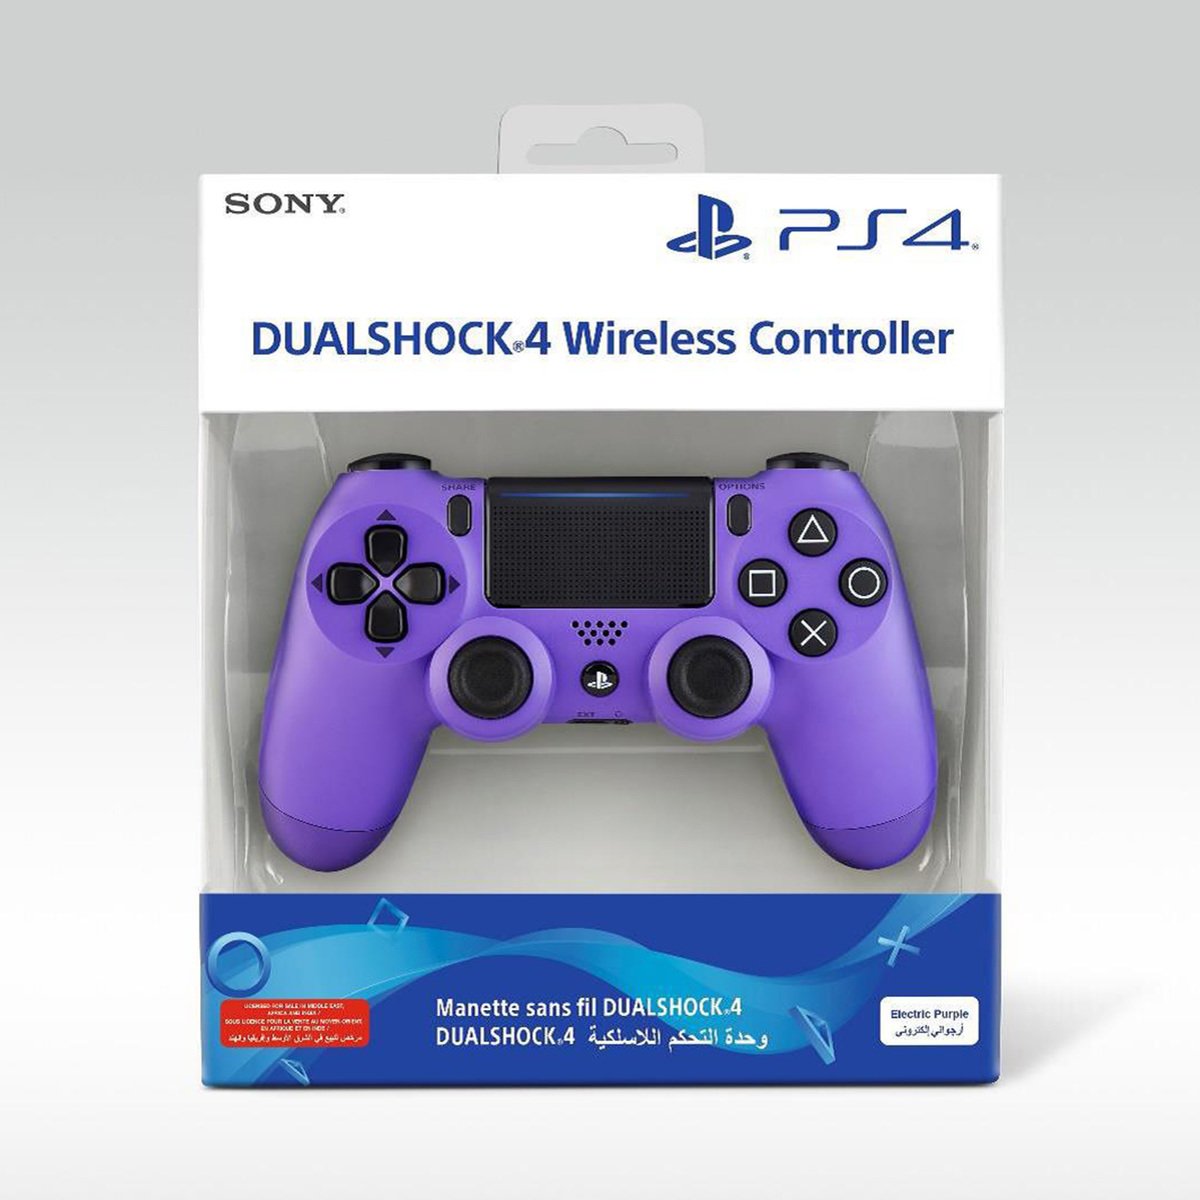 Sony Playstation DualShock 4 29X Controller Electric Purple